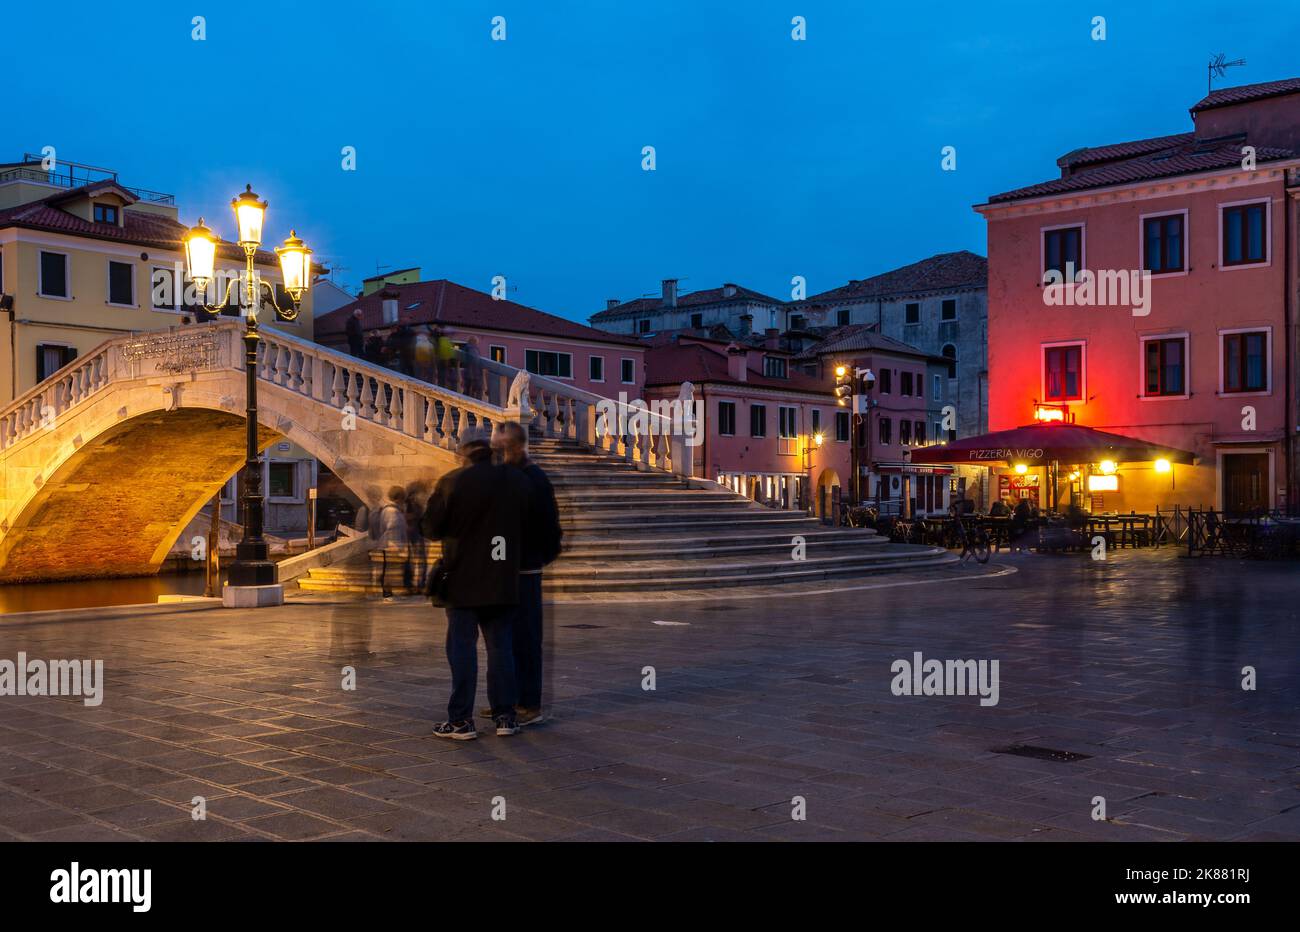 The Vigo bridge in historic centre of Chioggia city, Venetian lagoon, Venice province,northern italy - night photography - long exposure Stock Photo